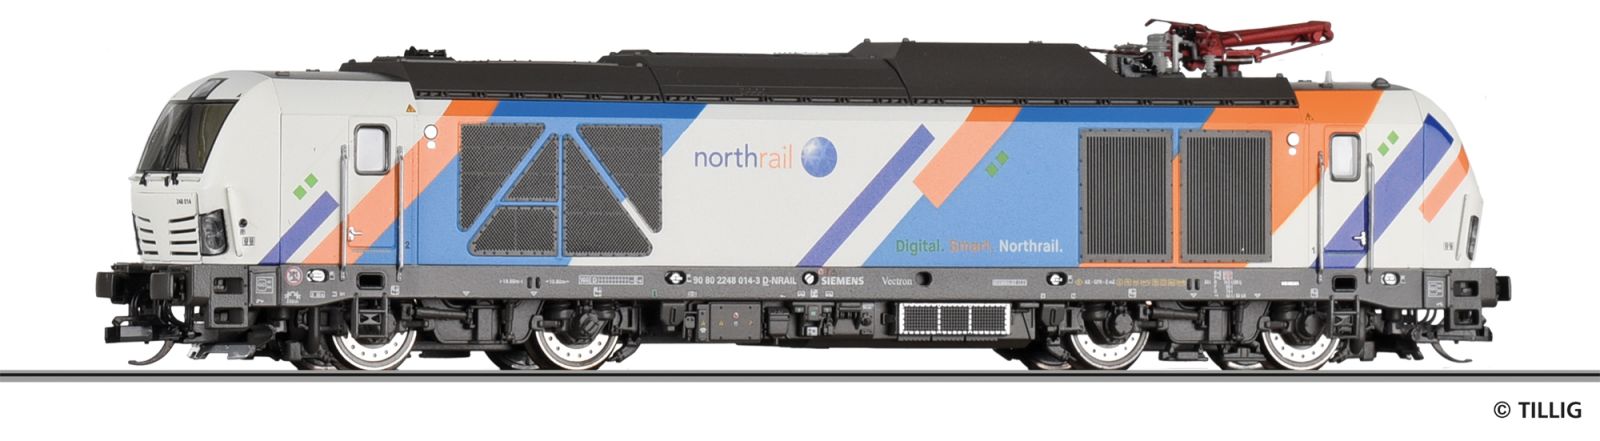 Dual power locomotive Northrail GmbH